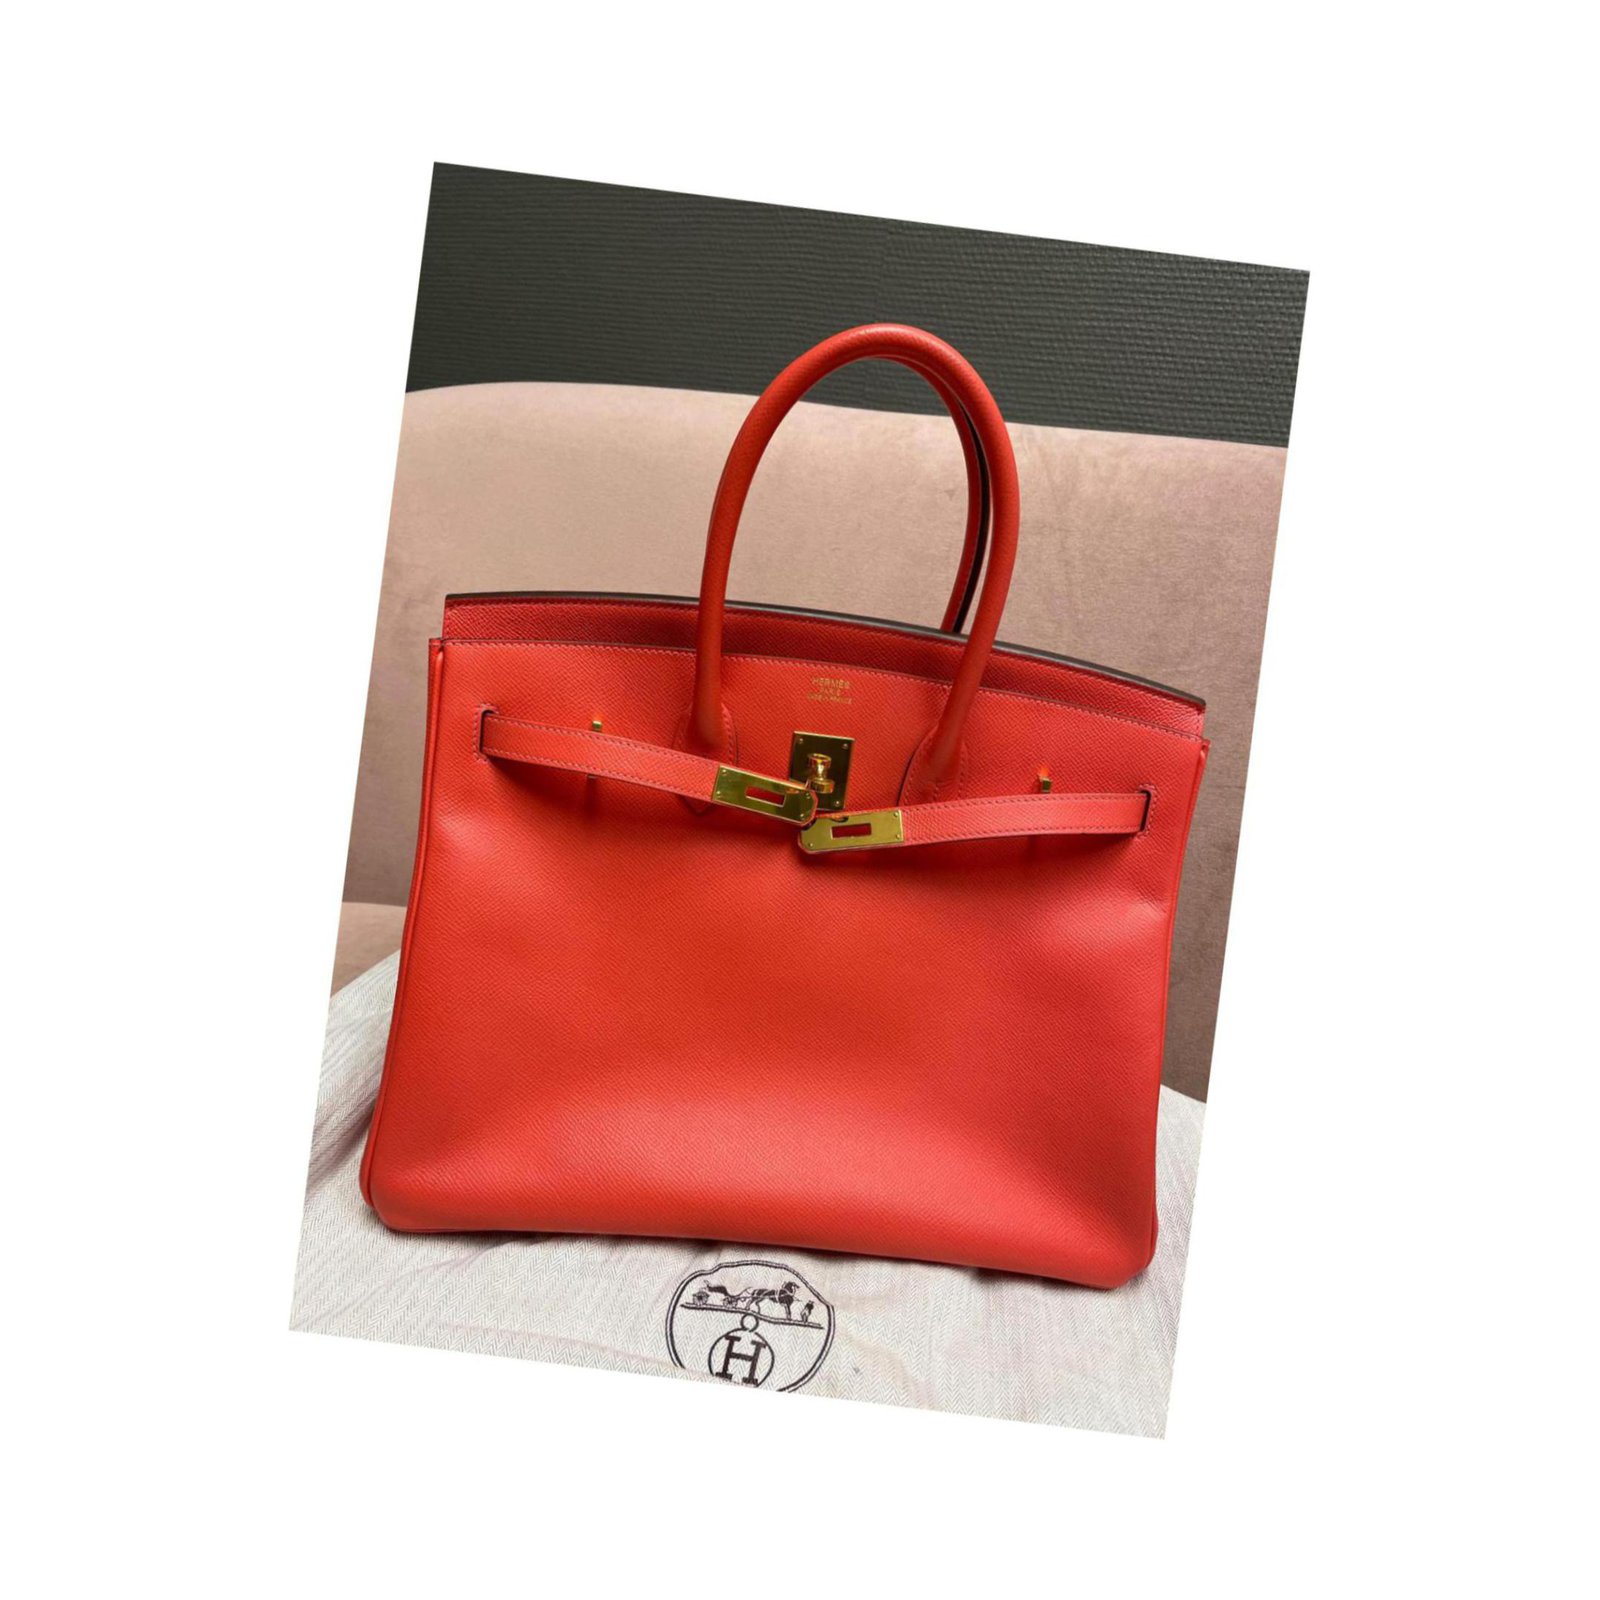 Hermès - Authenticated Birkin 35 Handbag - Leather Pink Plain for Women, Good Condition